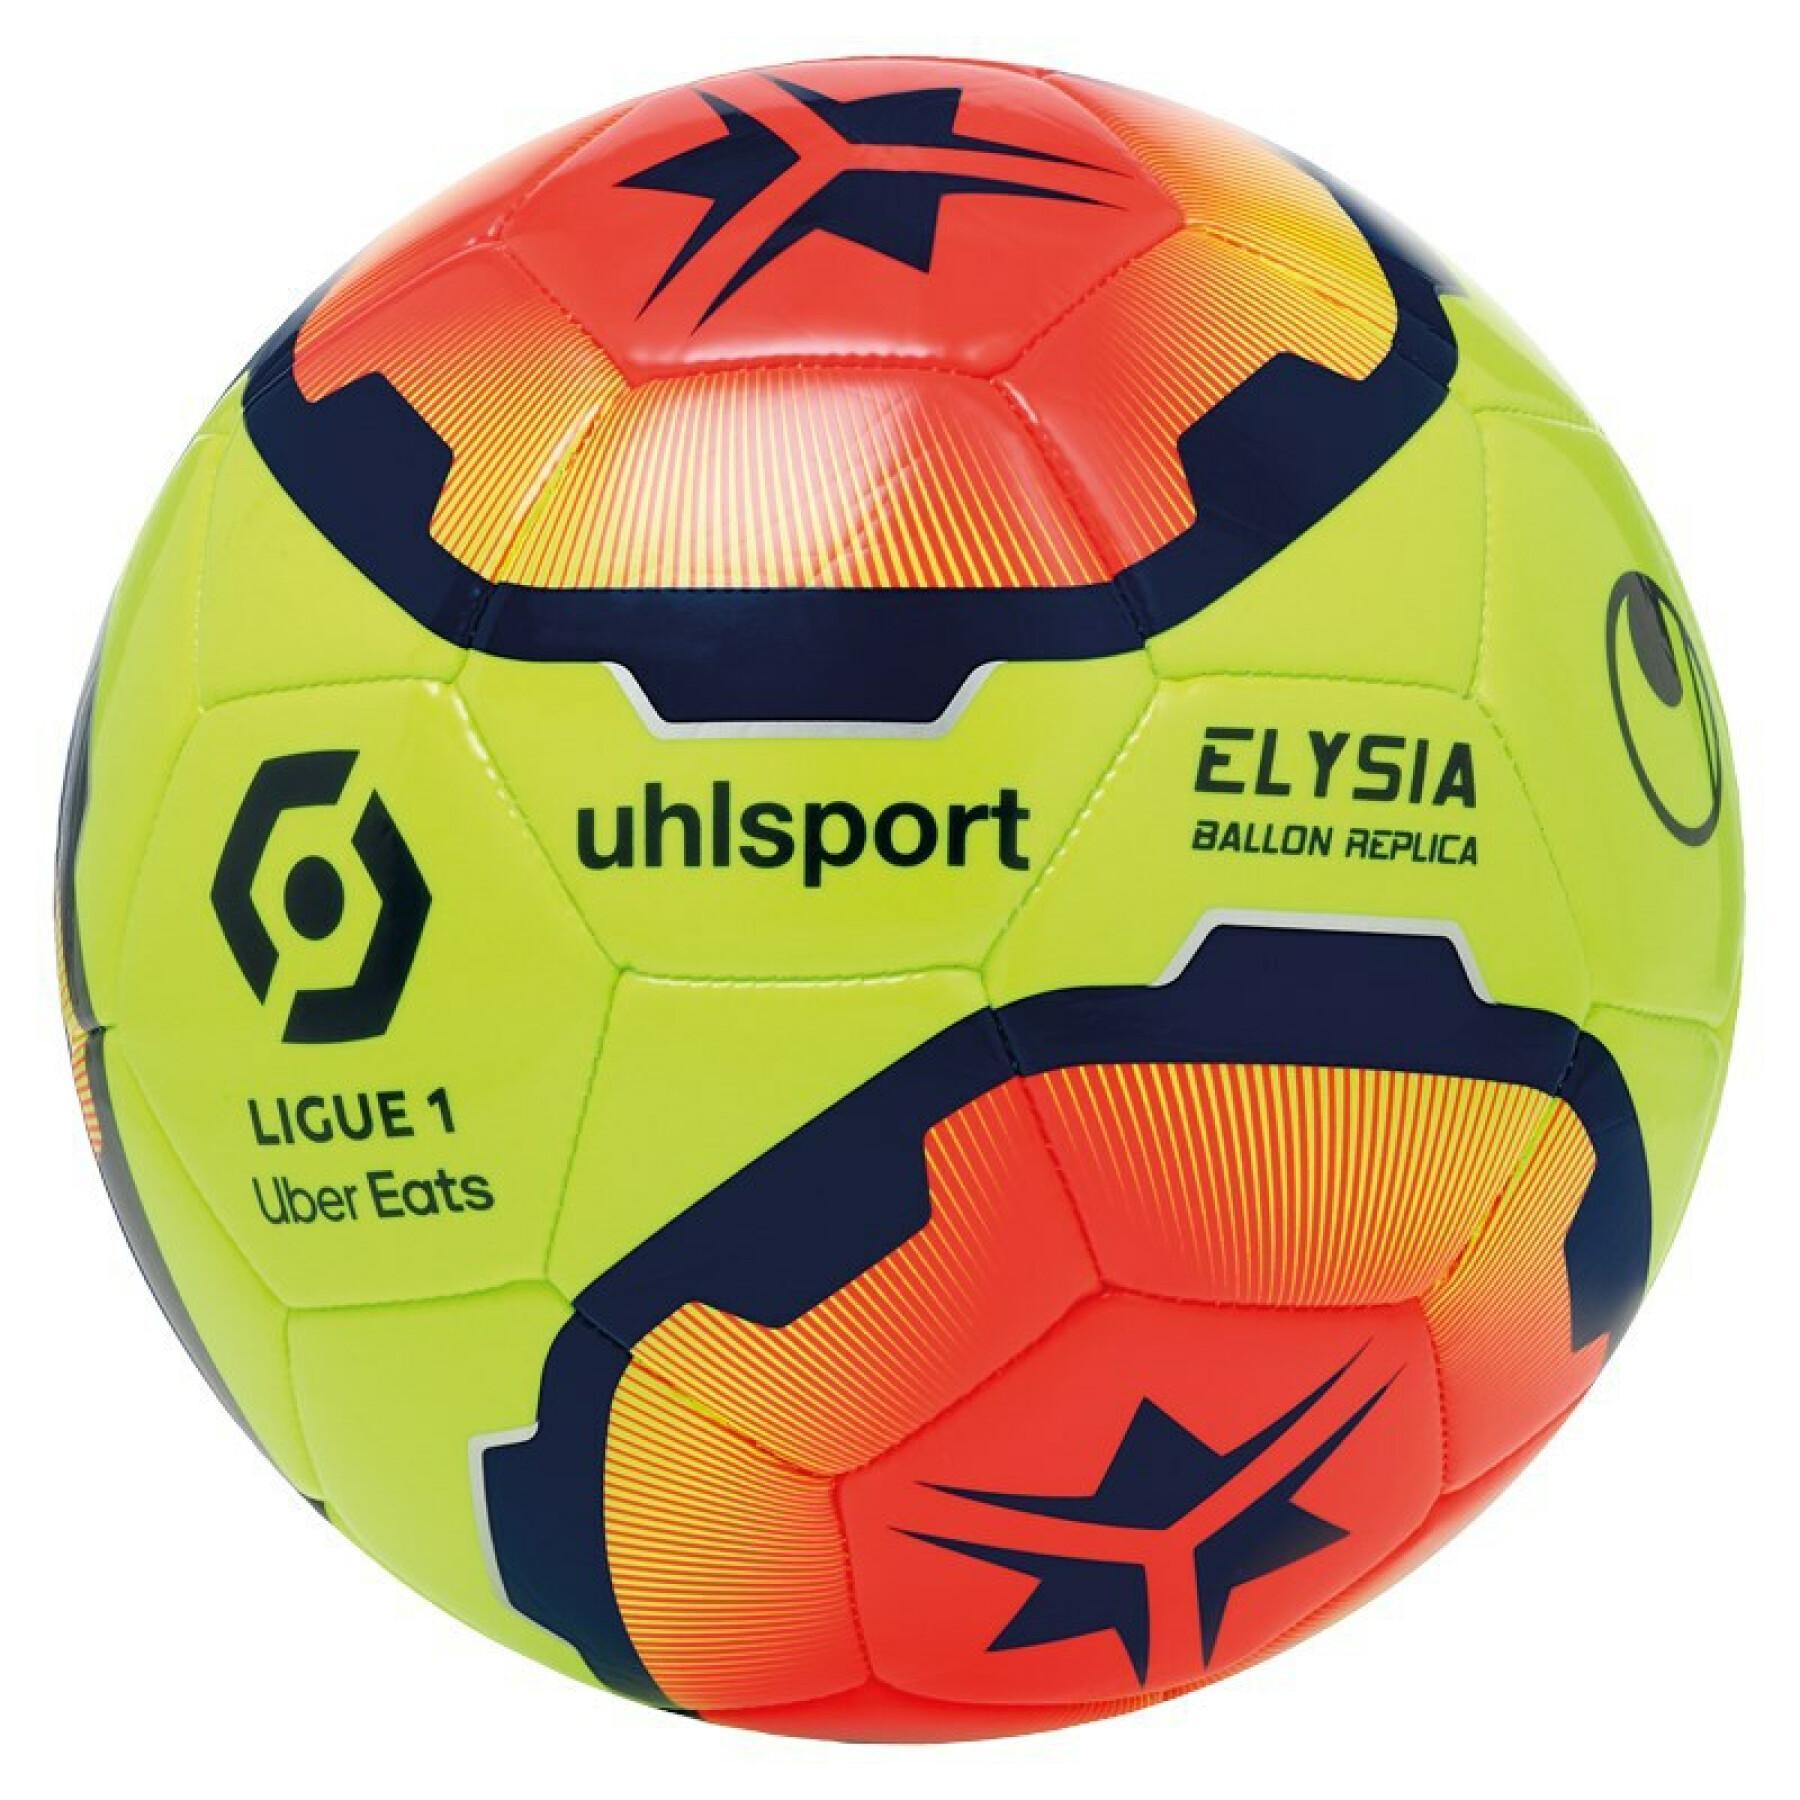 Ballong Uhlsport Elysia replica